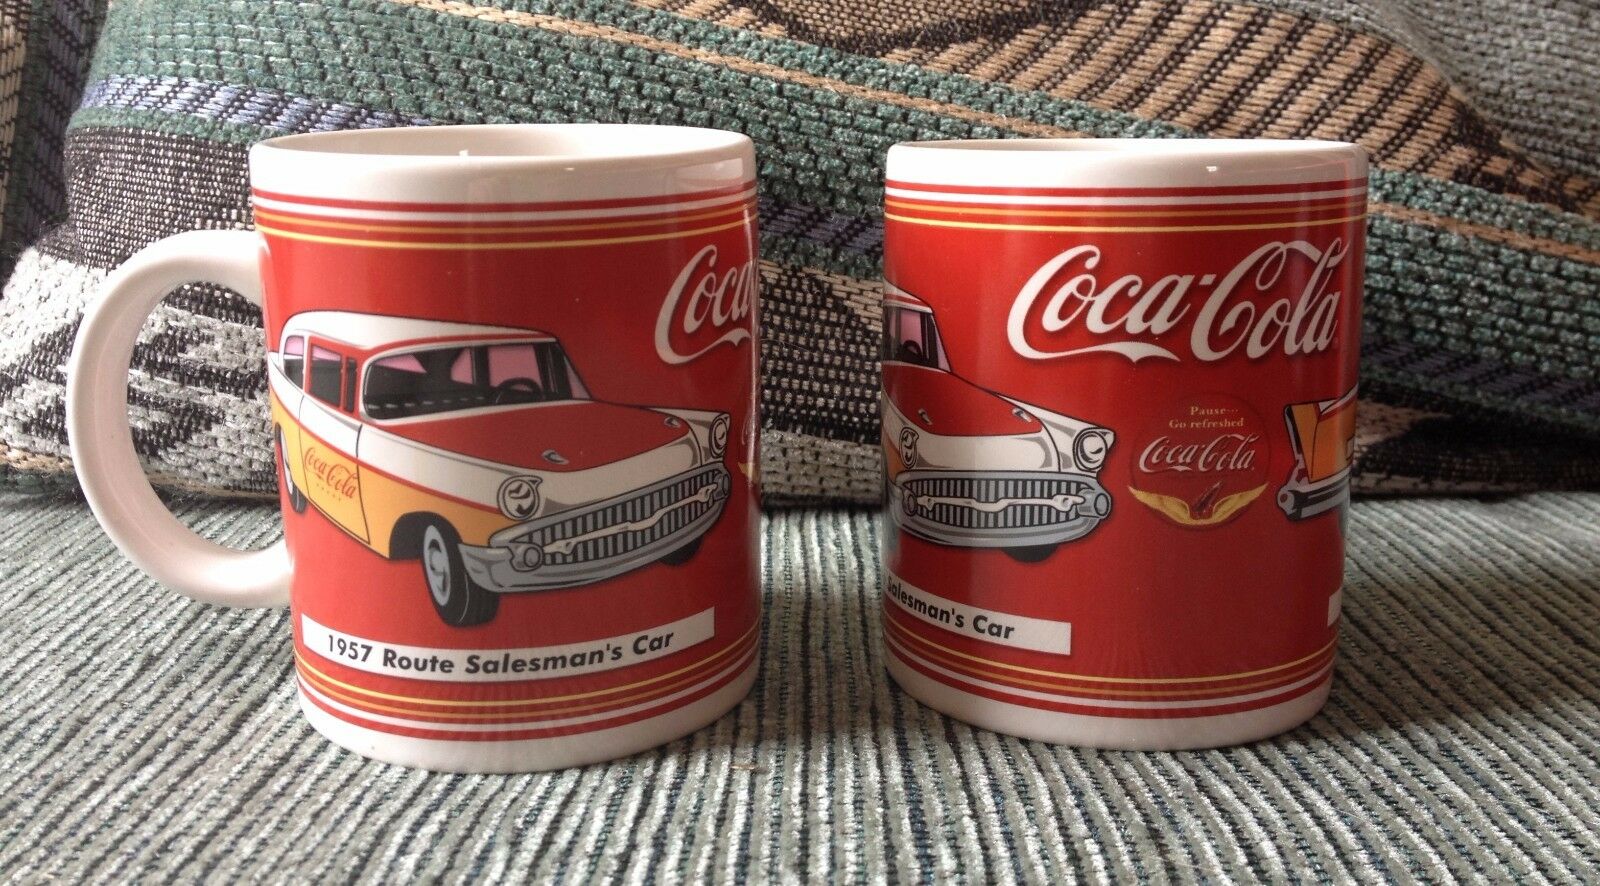 2002 Coca-cola / Coke 1957 Route Salesman's Car Mugs / Cups Set Of 2